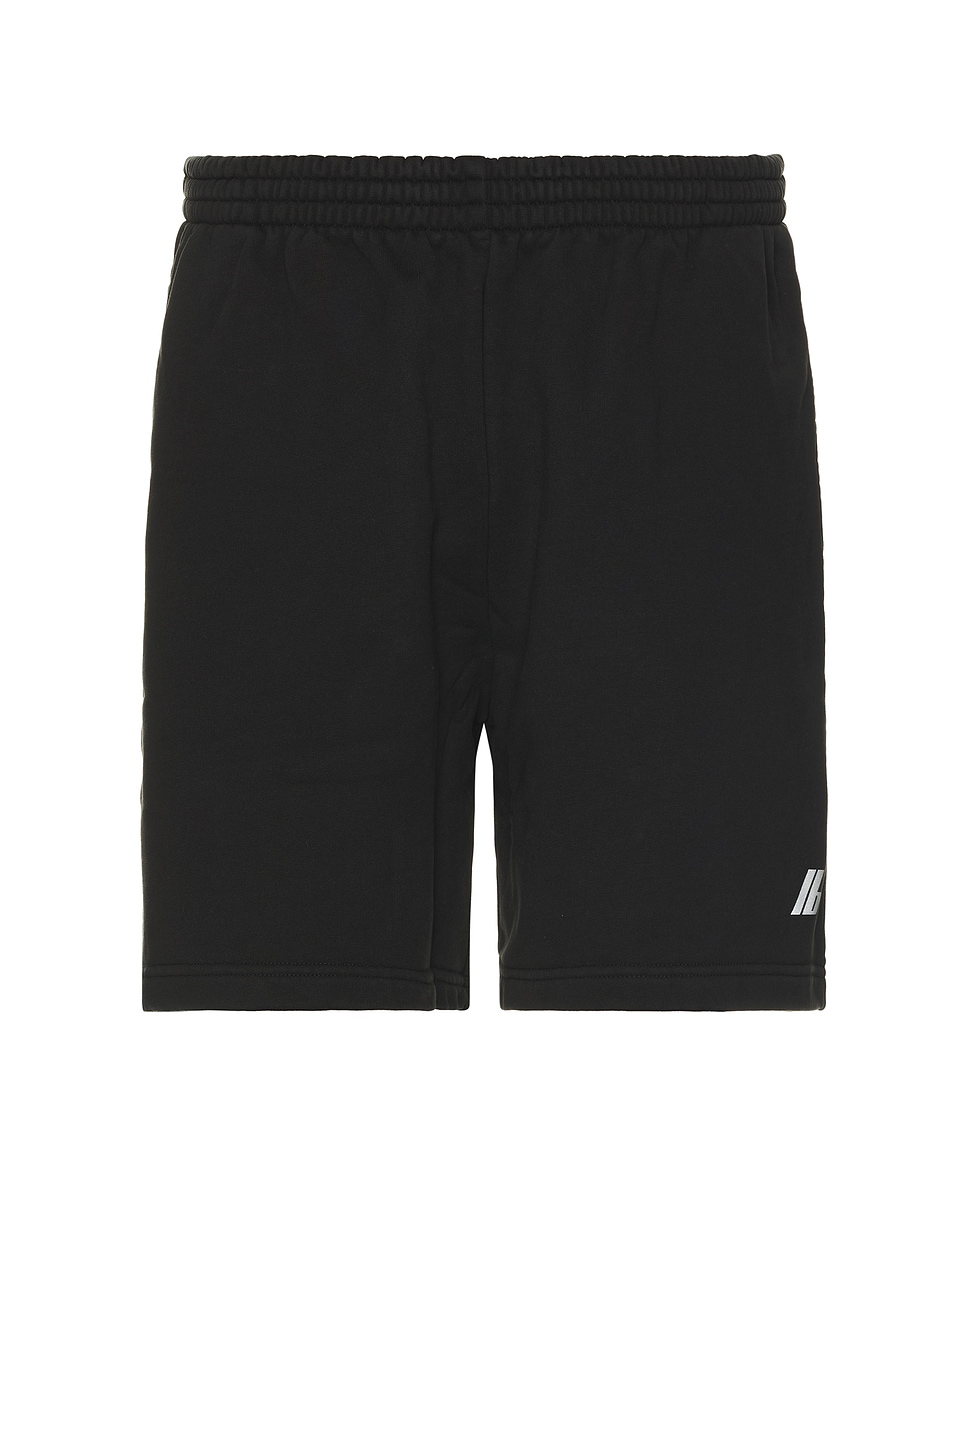 Image 1 of Balenciaga Sweat Shorts in Faded Black